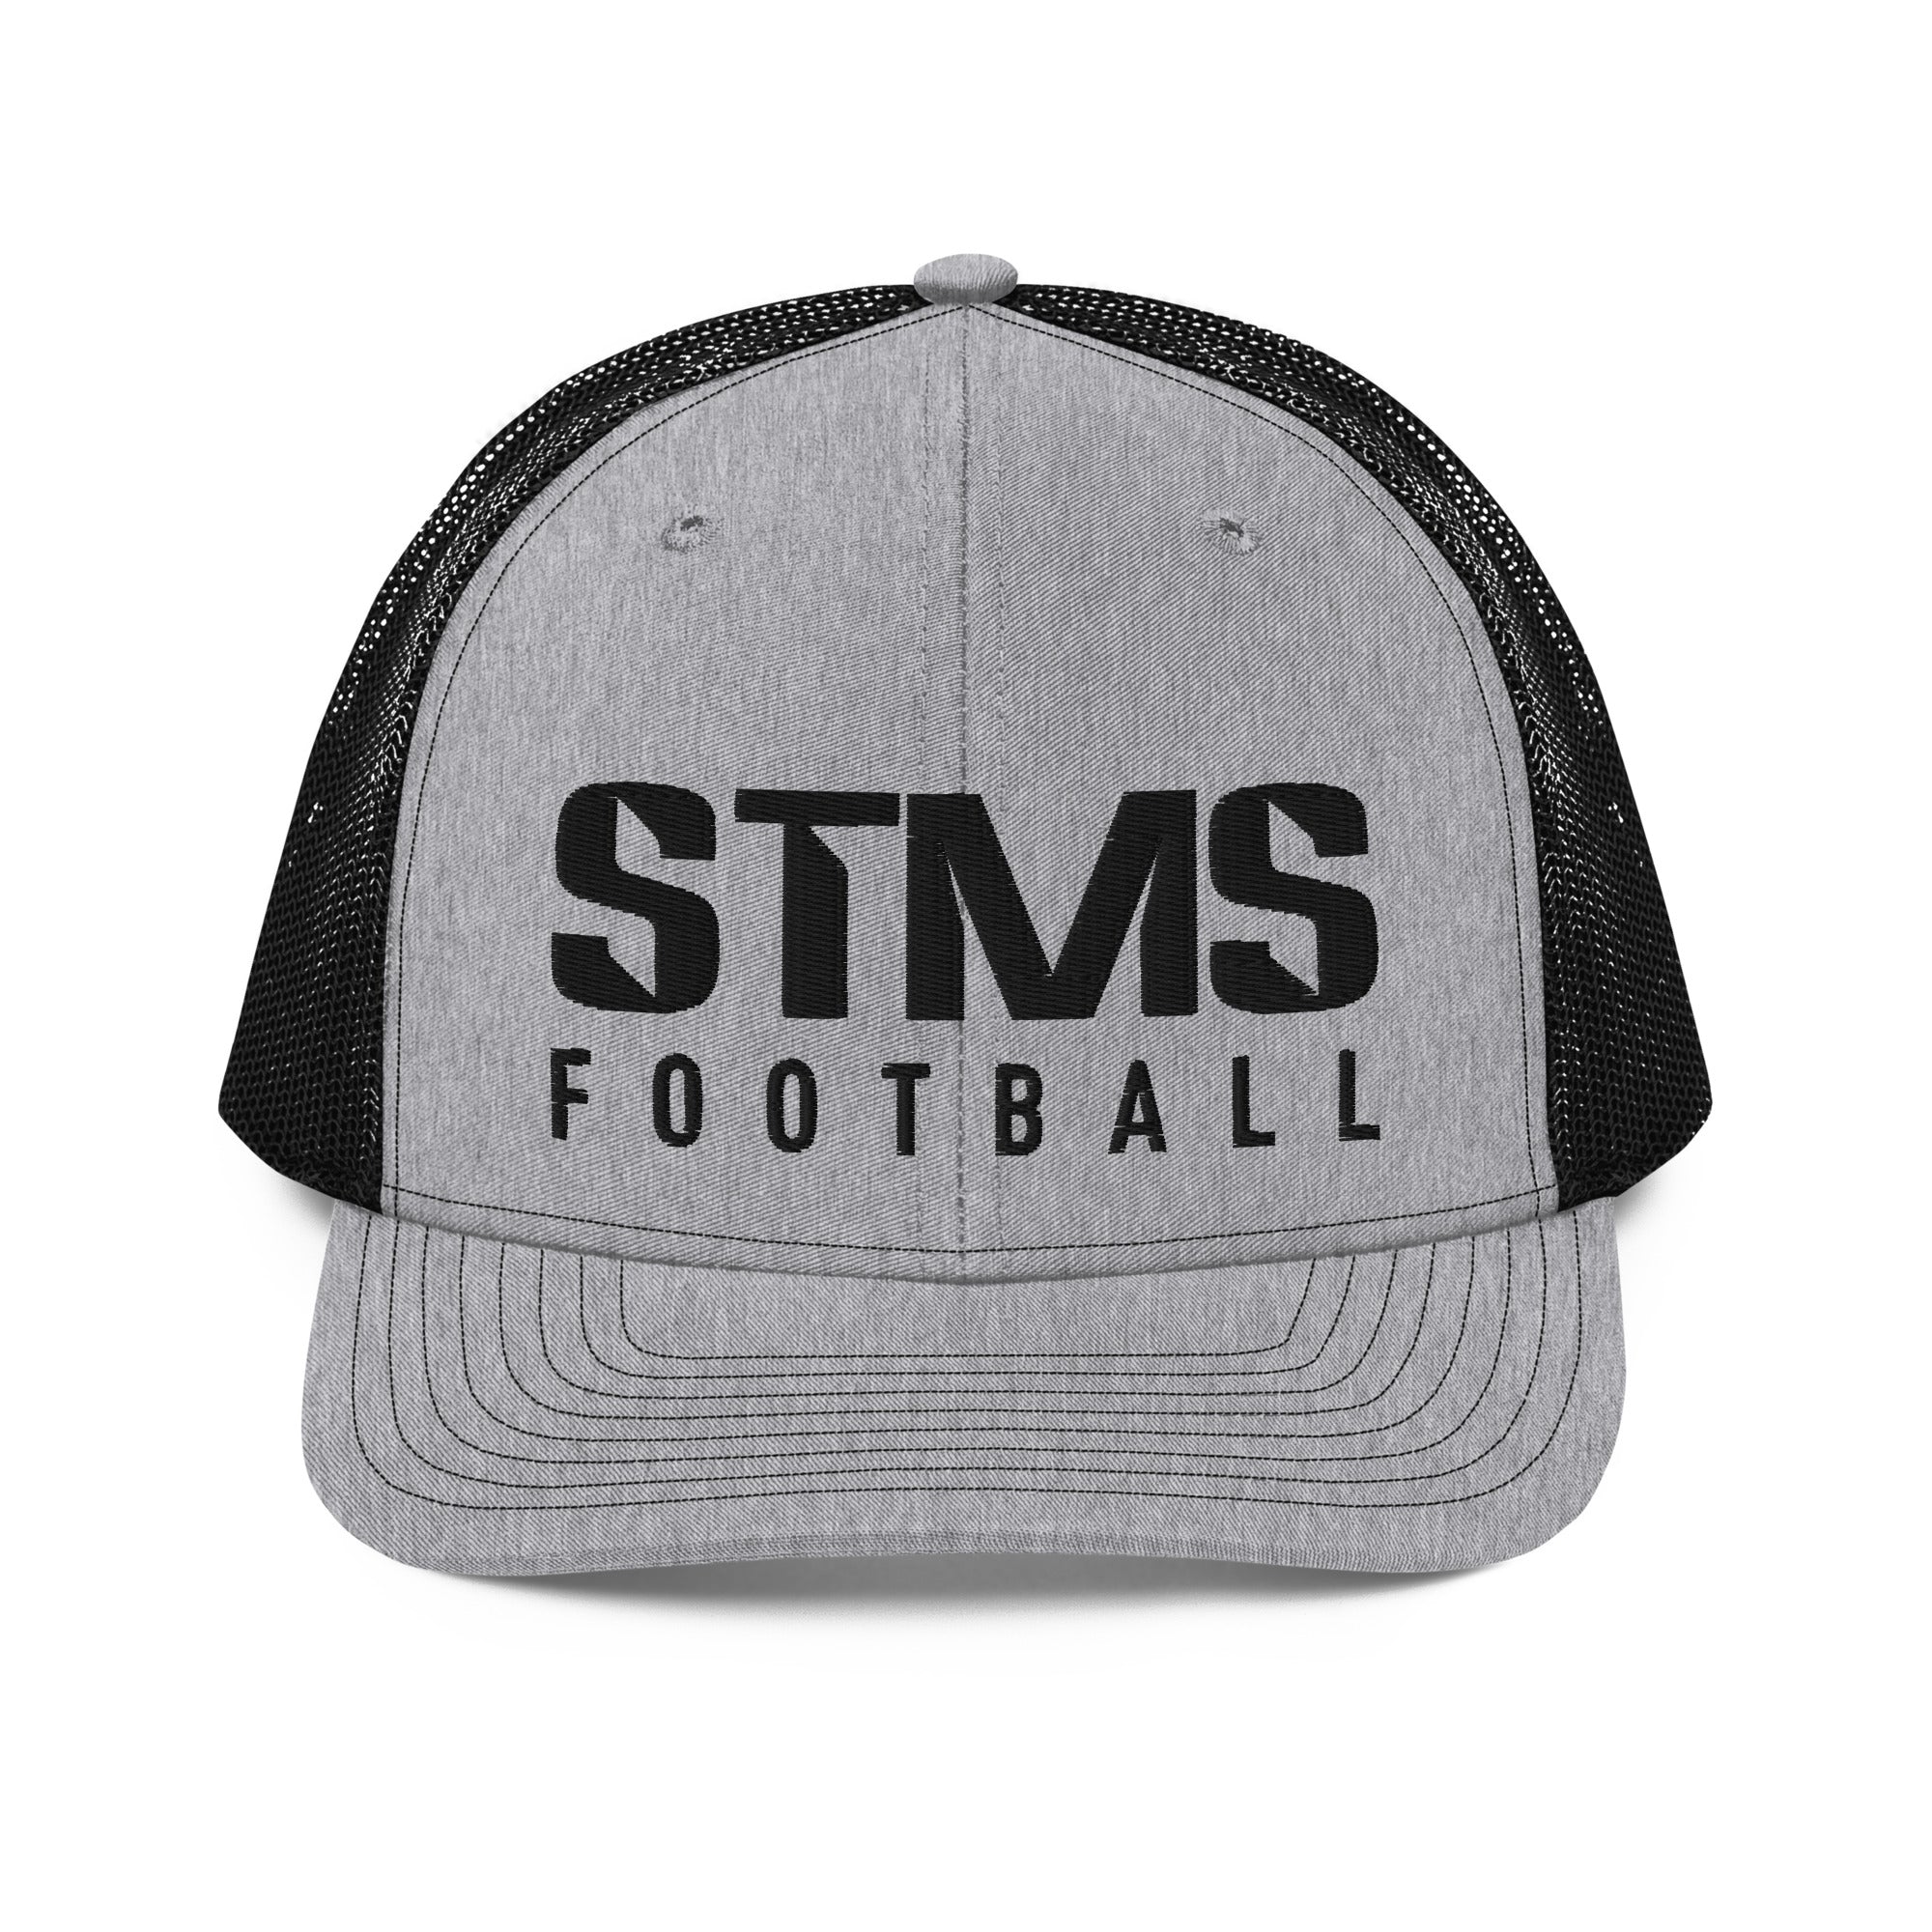 STMS Football Trucker Cap